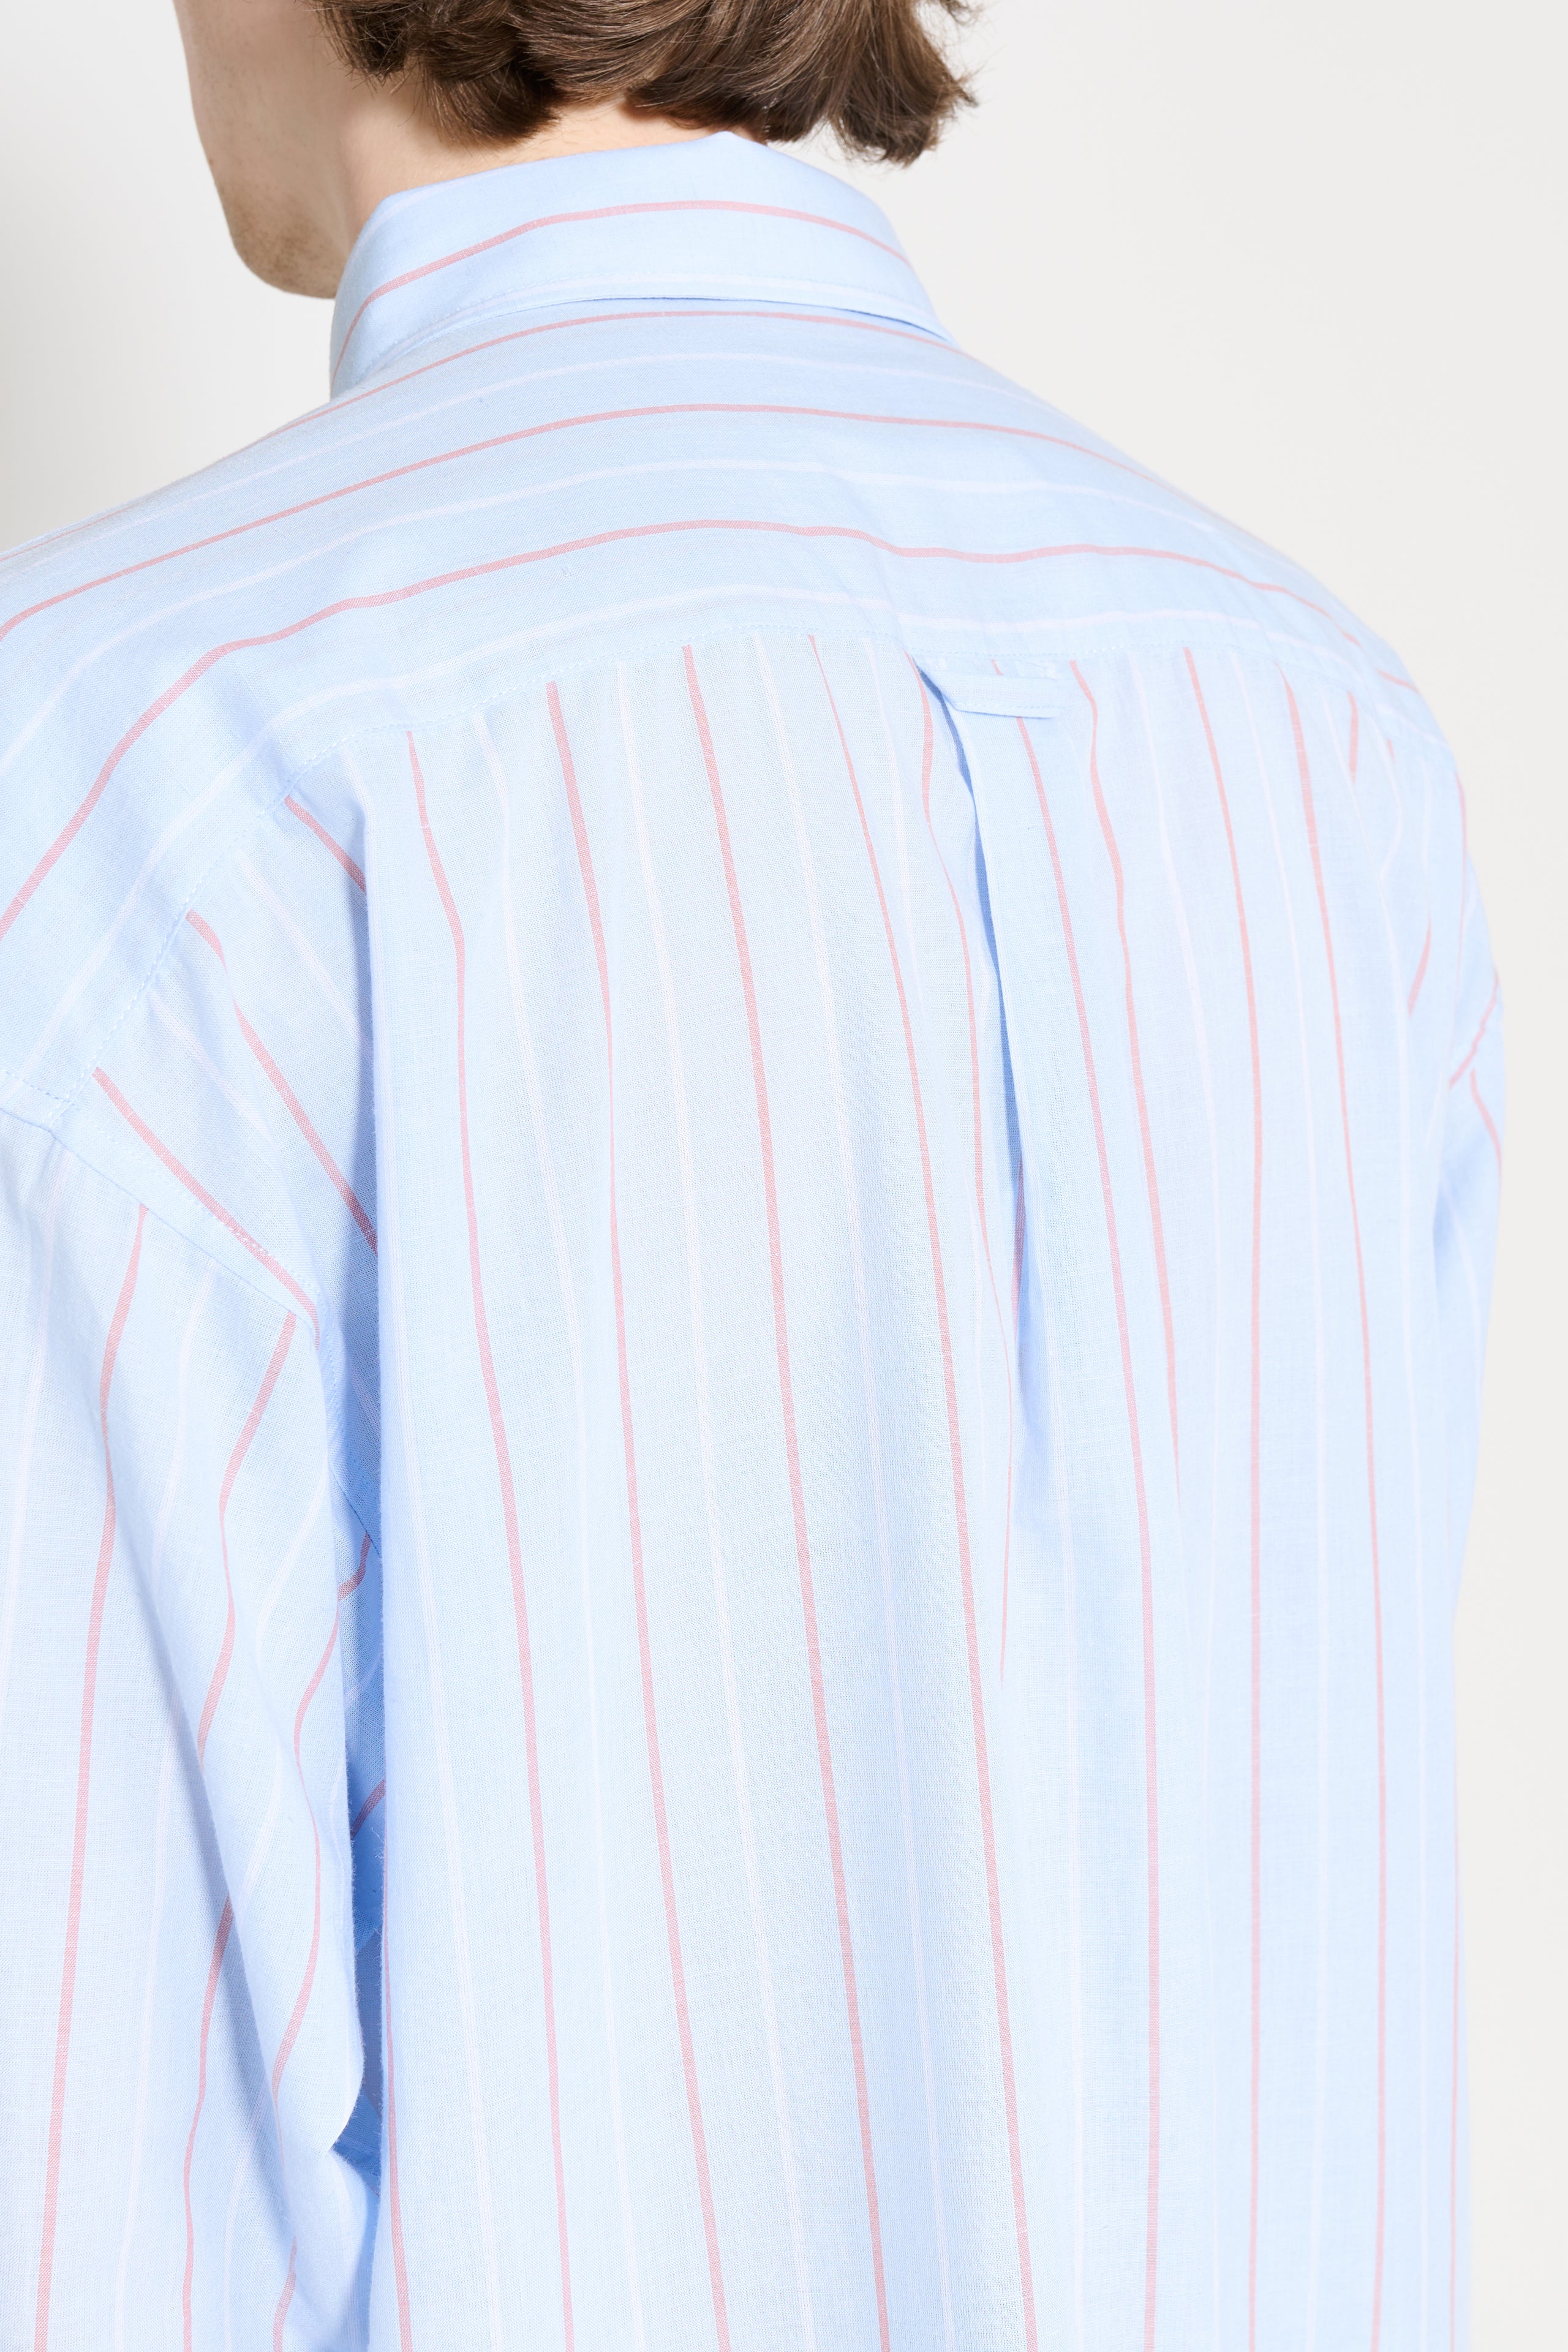 Stüssy Classic Ls Shirt Stripe Light Blue